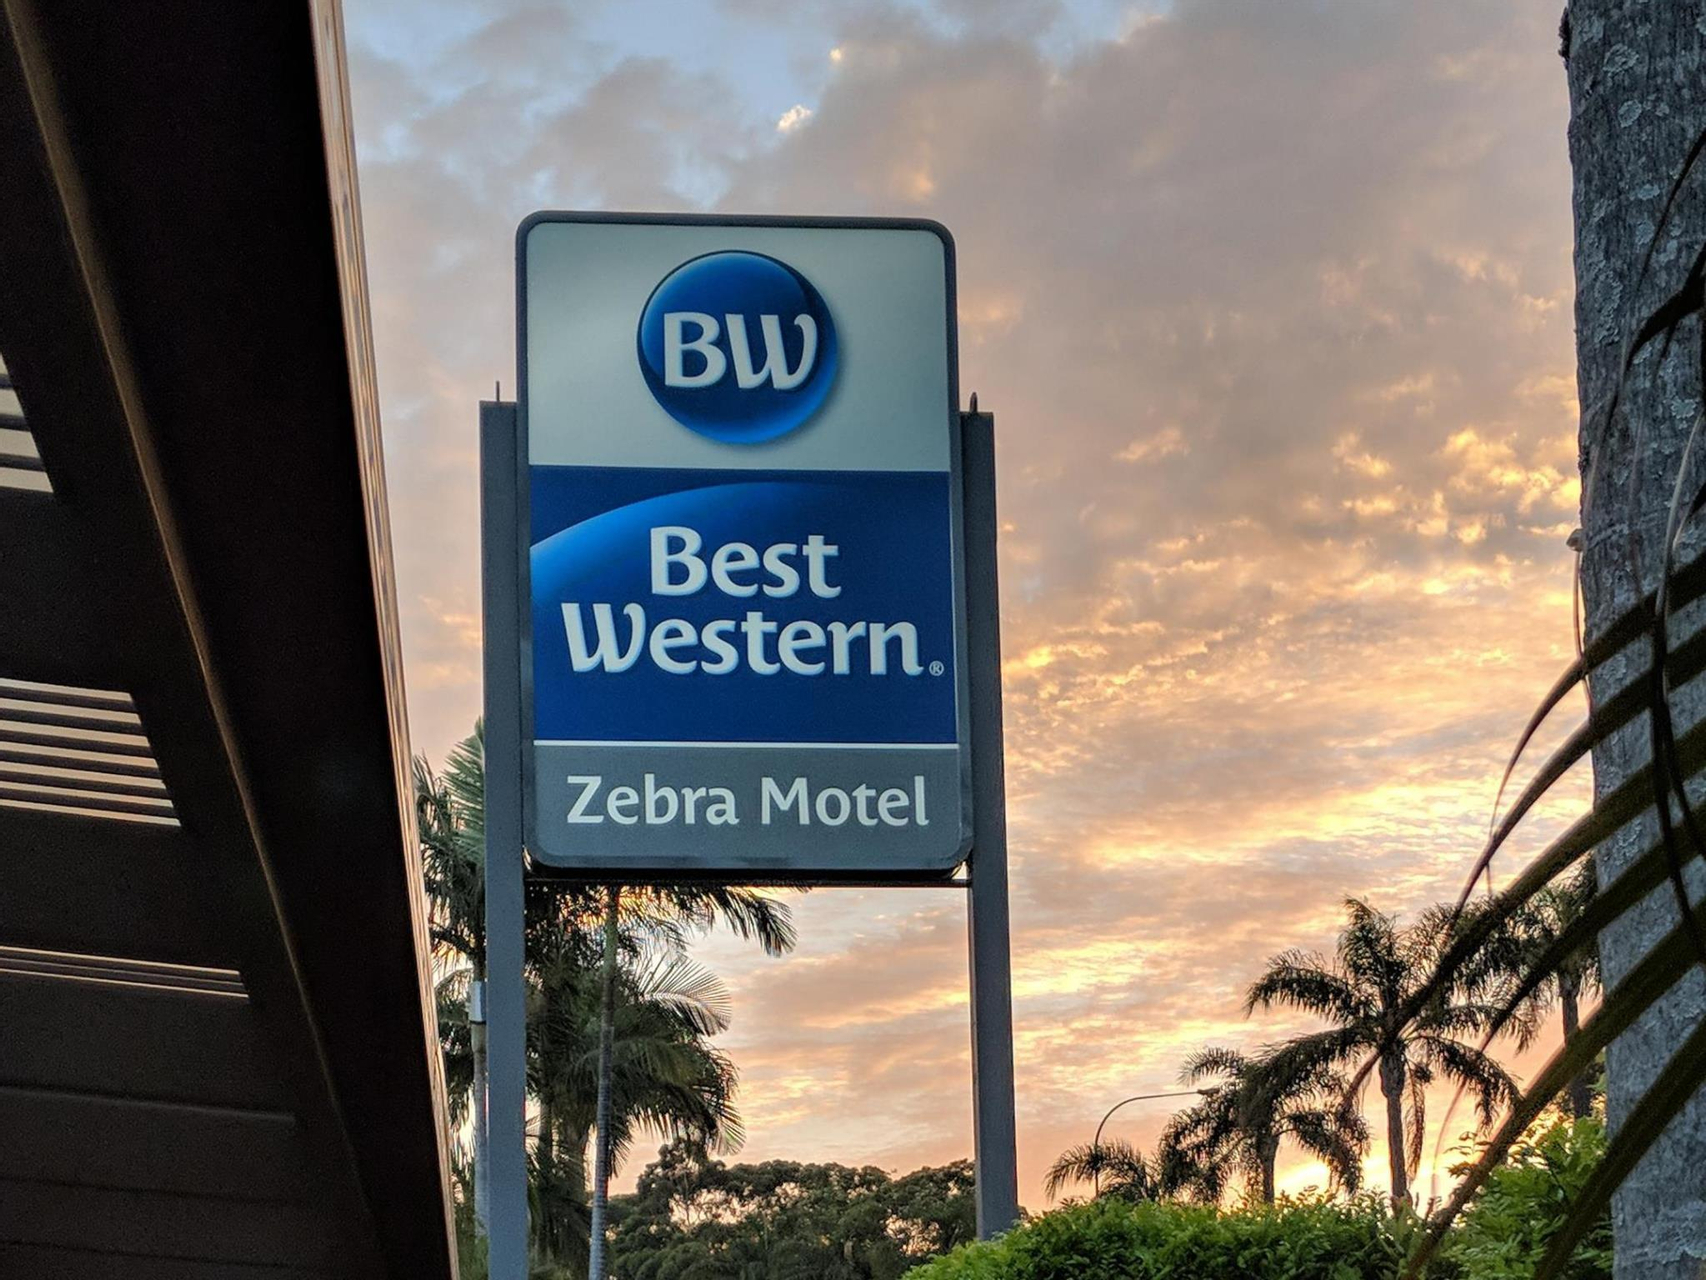 Exterior & Views, Best Western Zebra Motel, Coffs Harbour - Pt A